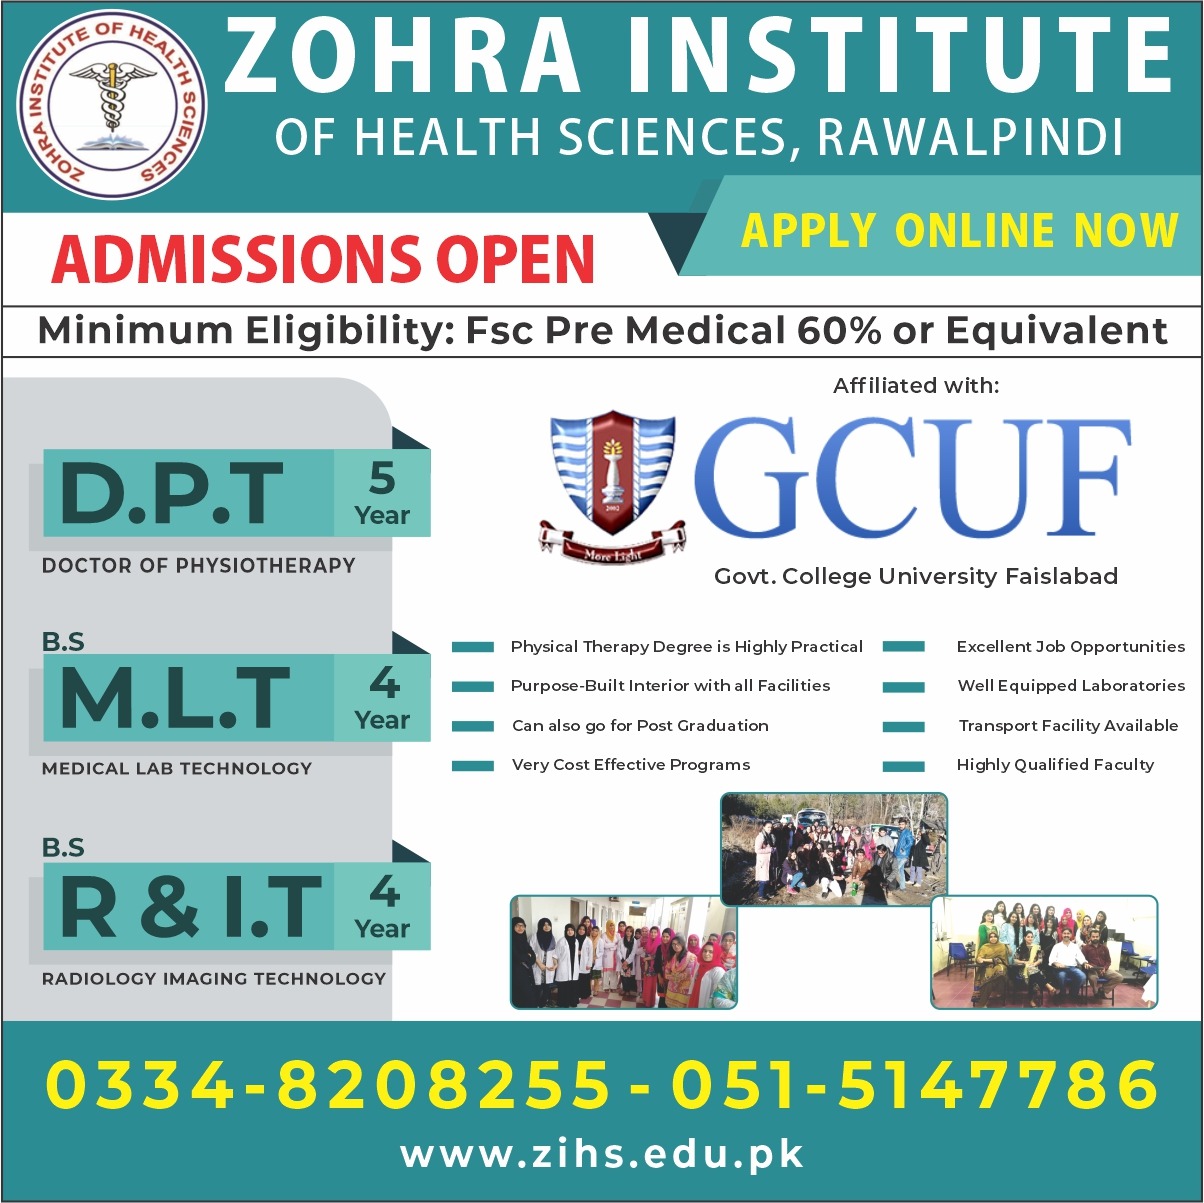 zohra institute of health sciences rawalpindi